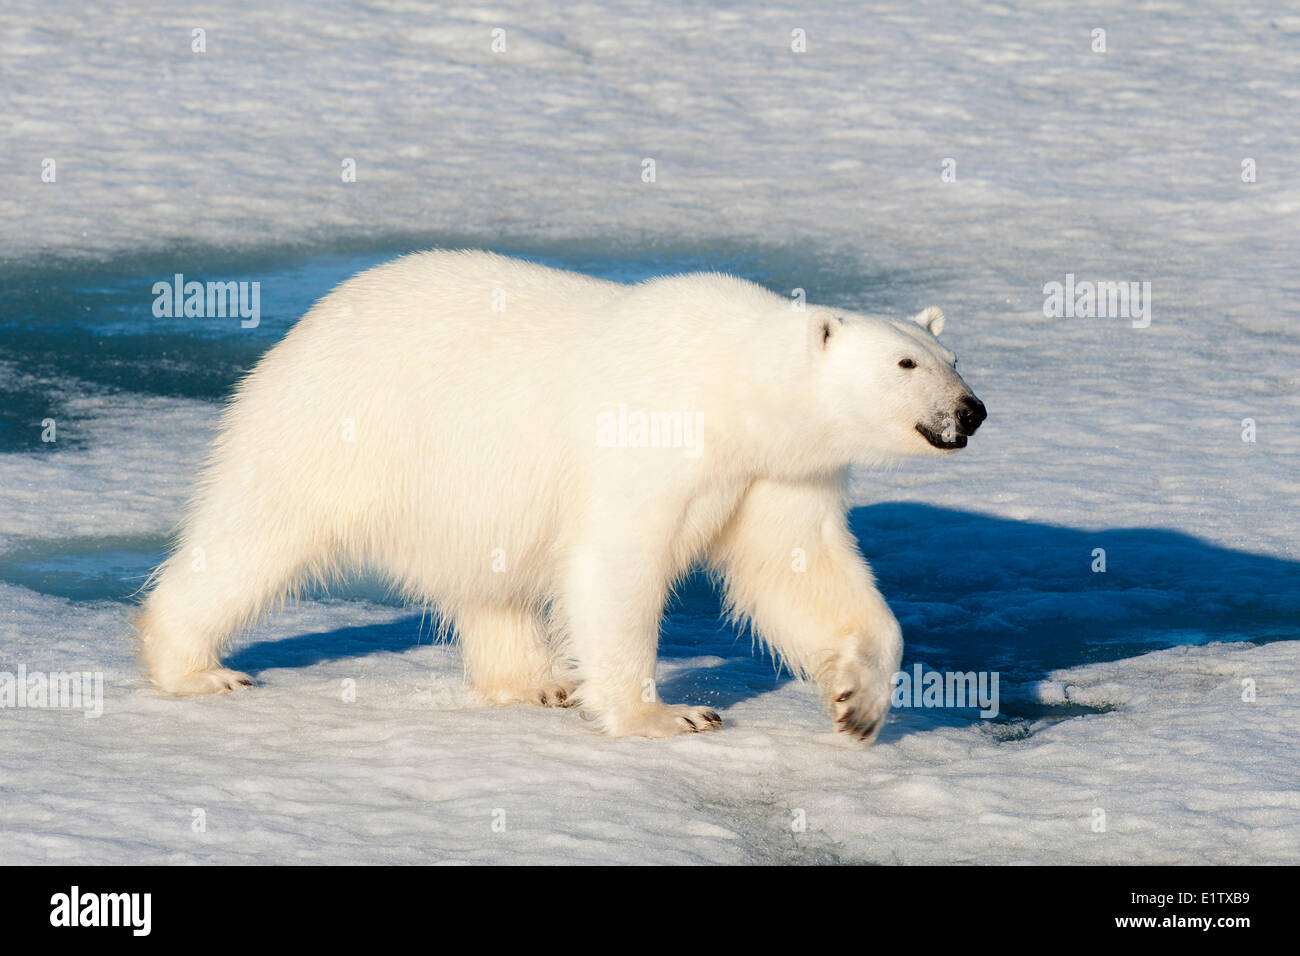 Polar bear (Ursus maritimus) on pack ice, Svalbard Archipelago, Norwegian Arctic Stock Photo